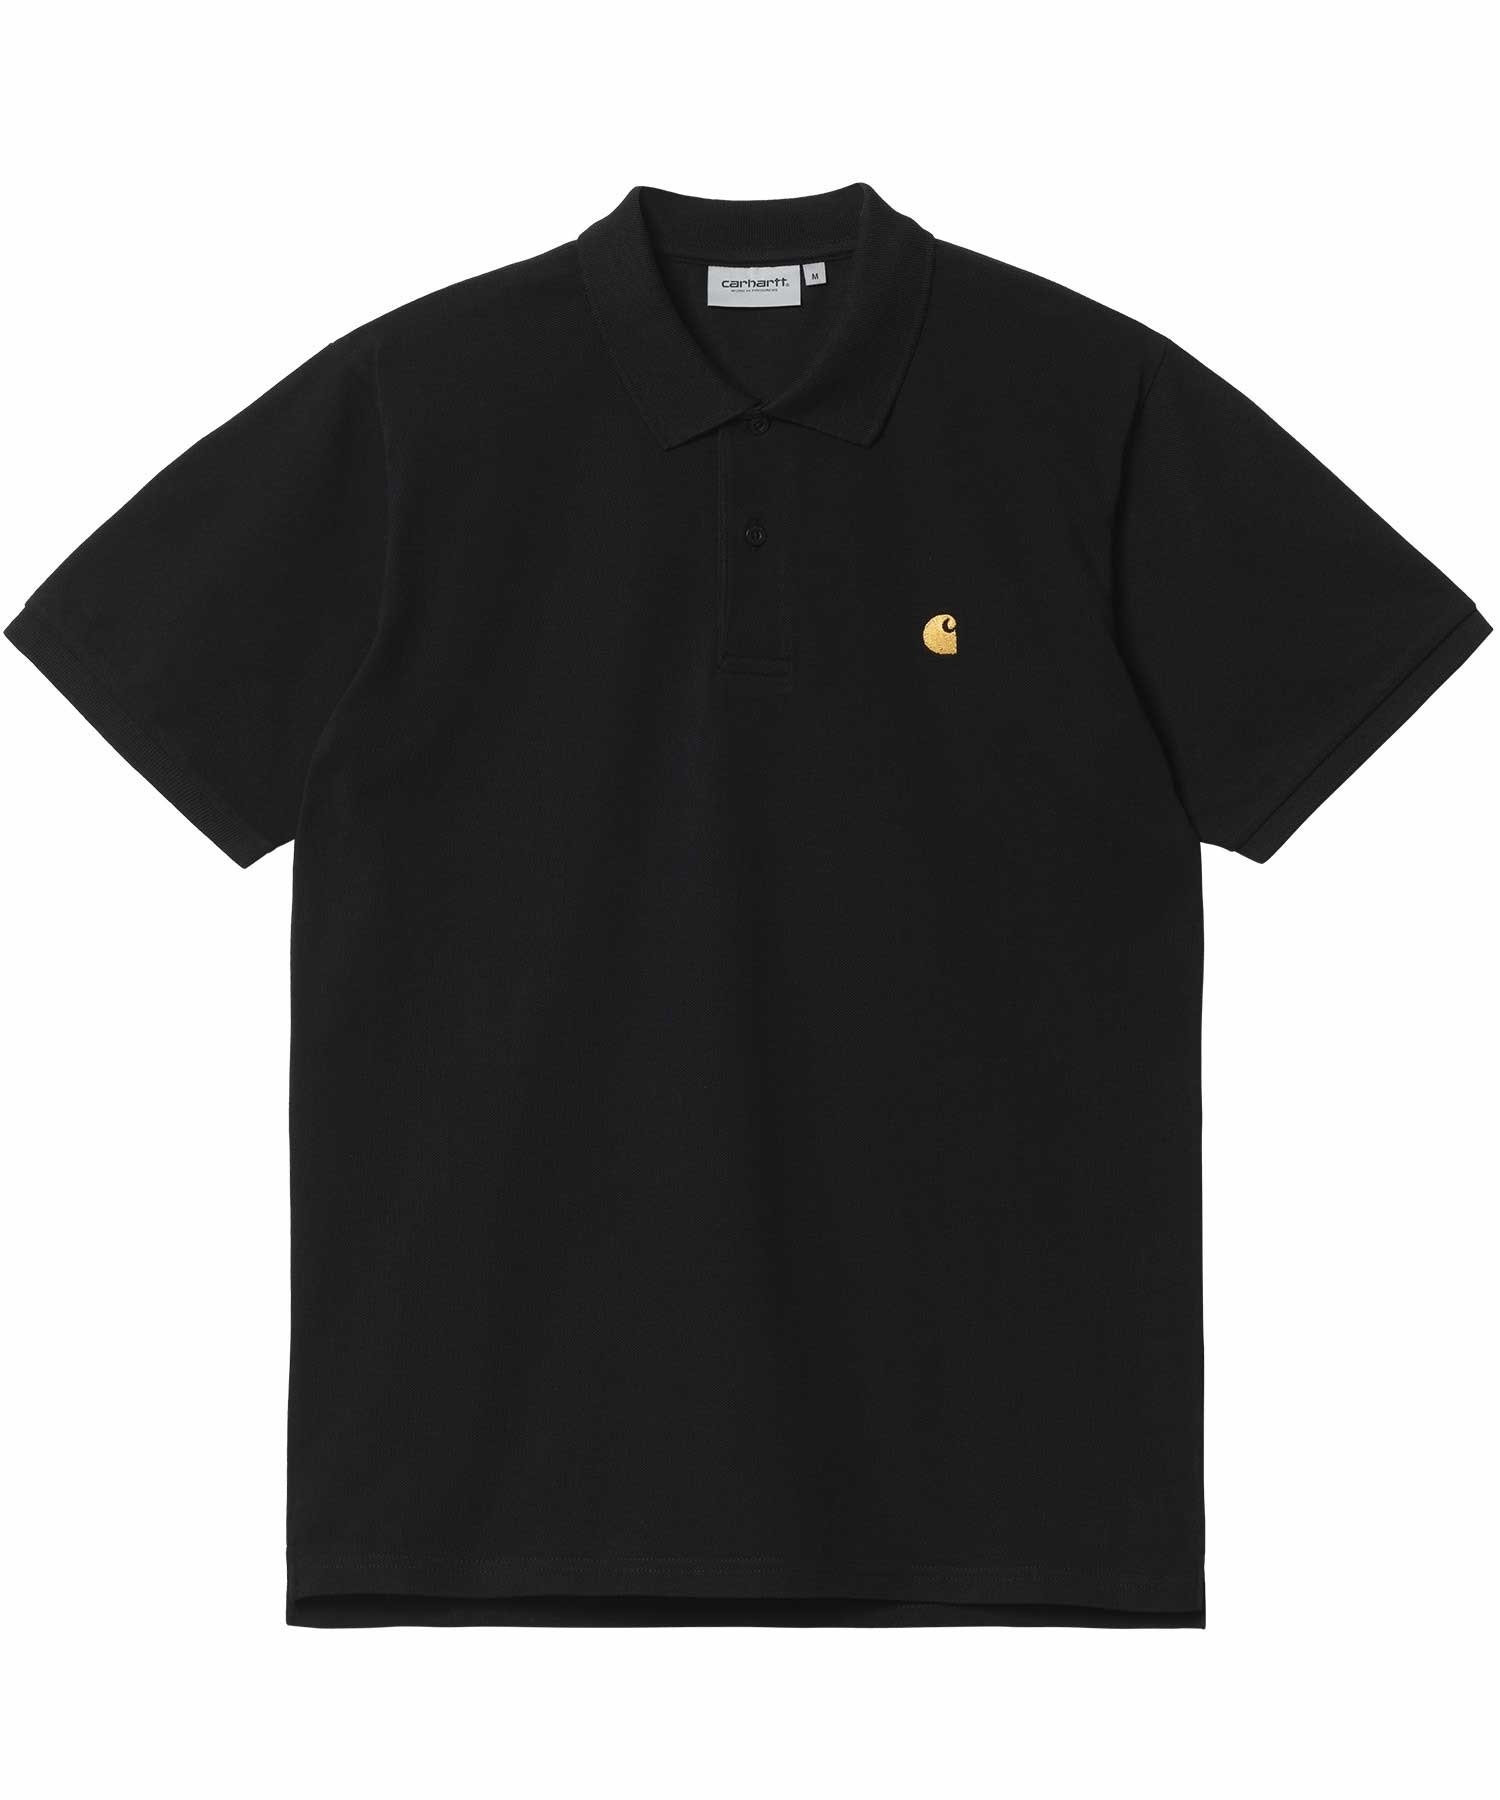 Carhartt WIP カーハートダブリューアイピー S S CHASE PIQUE POLO メンズ 半袖 ポロシャツ I023807(BLACK-M)